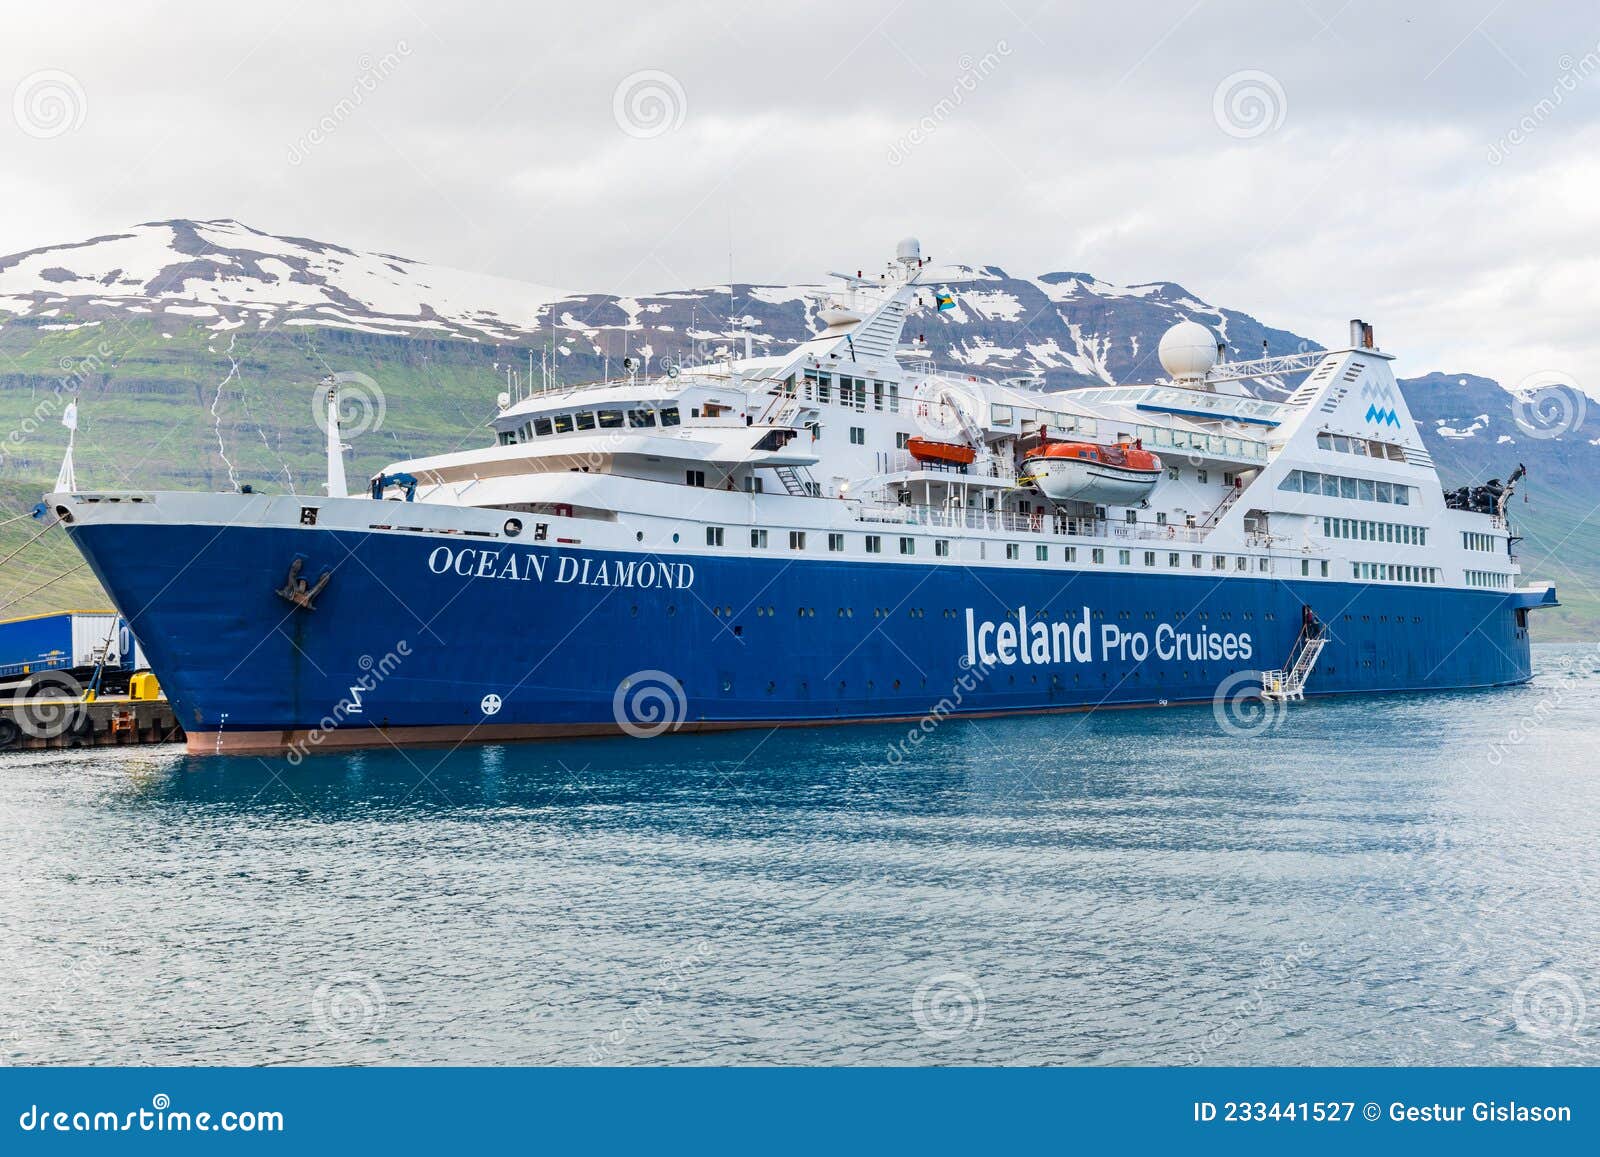 iceland cruise ship ocean diamond